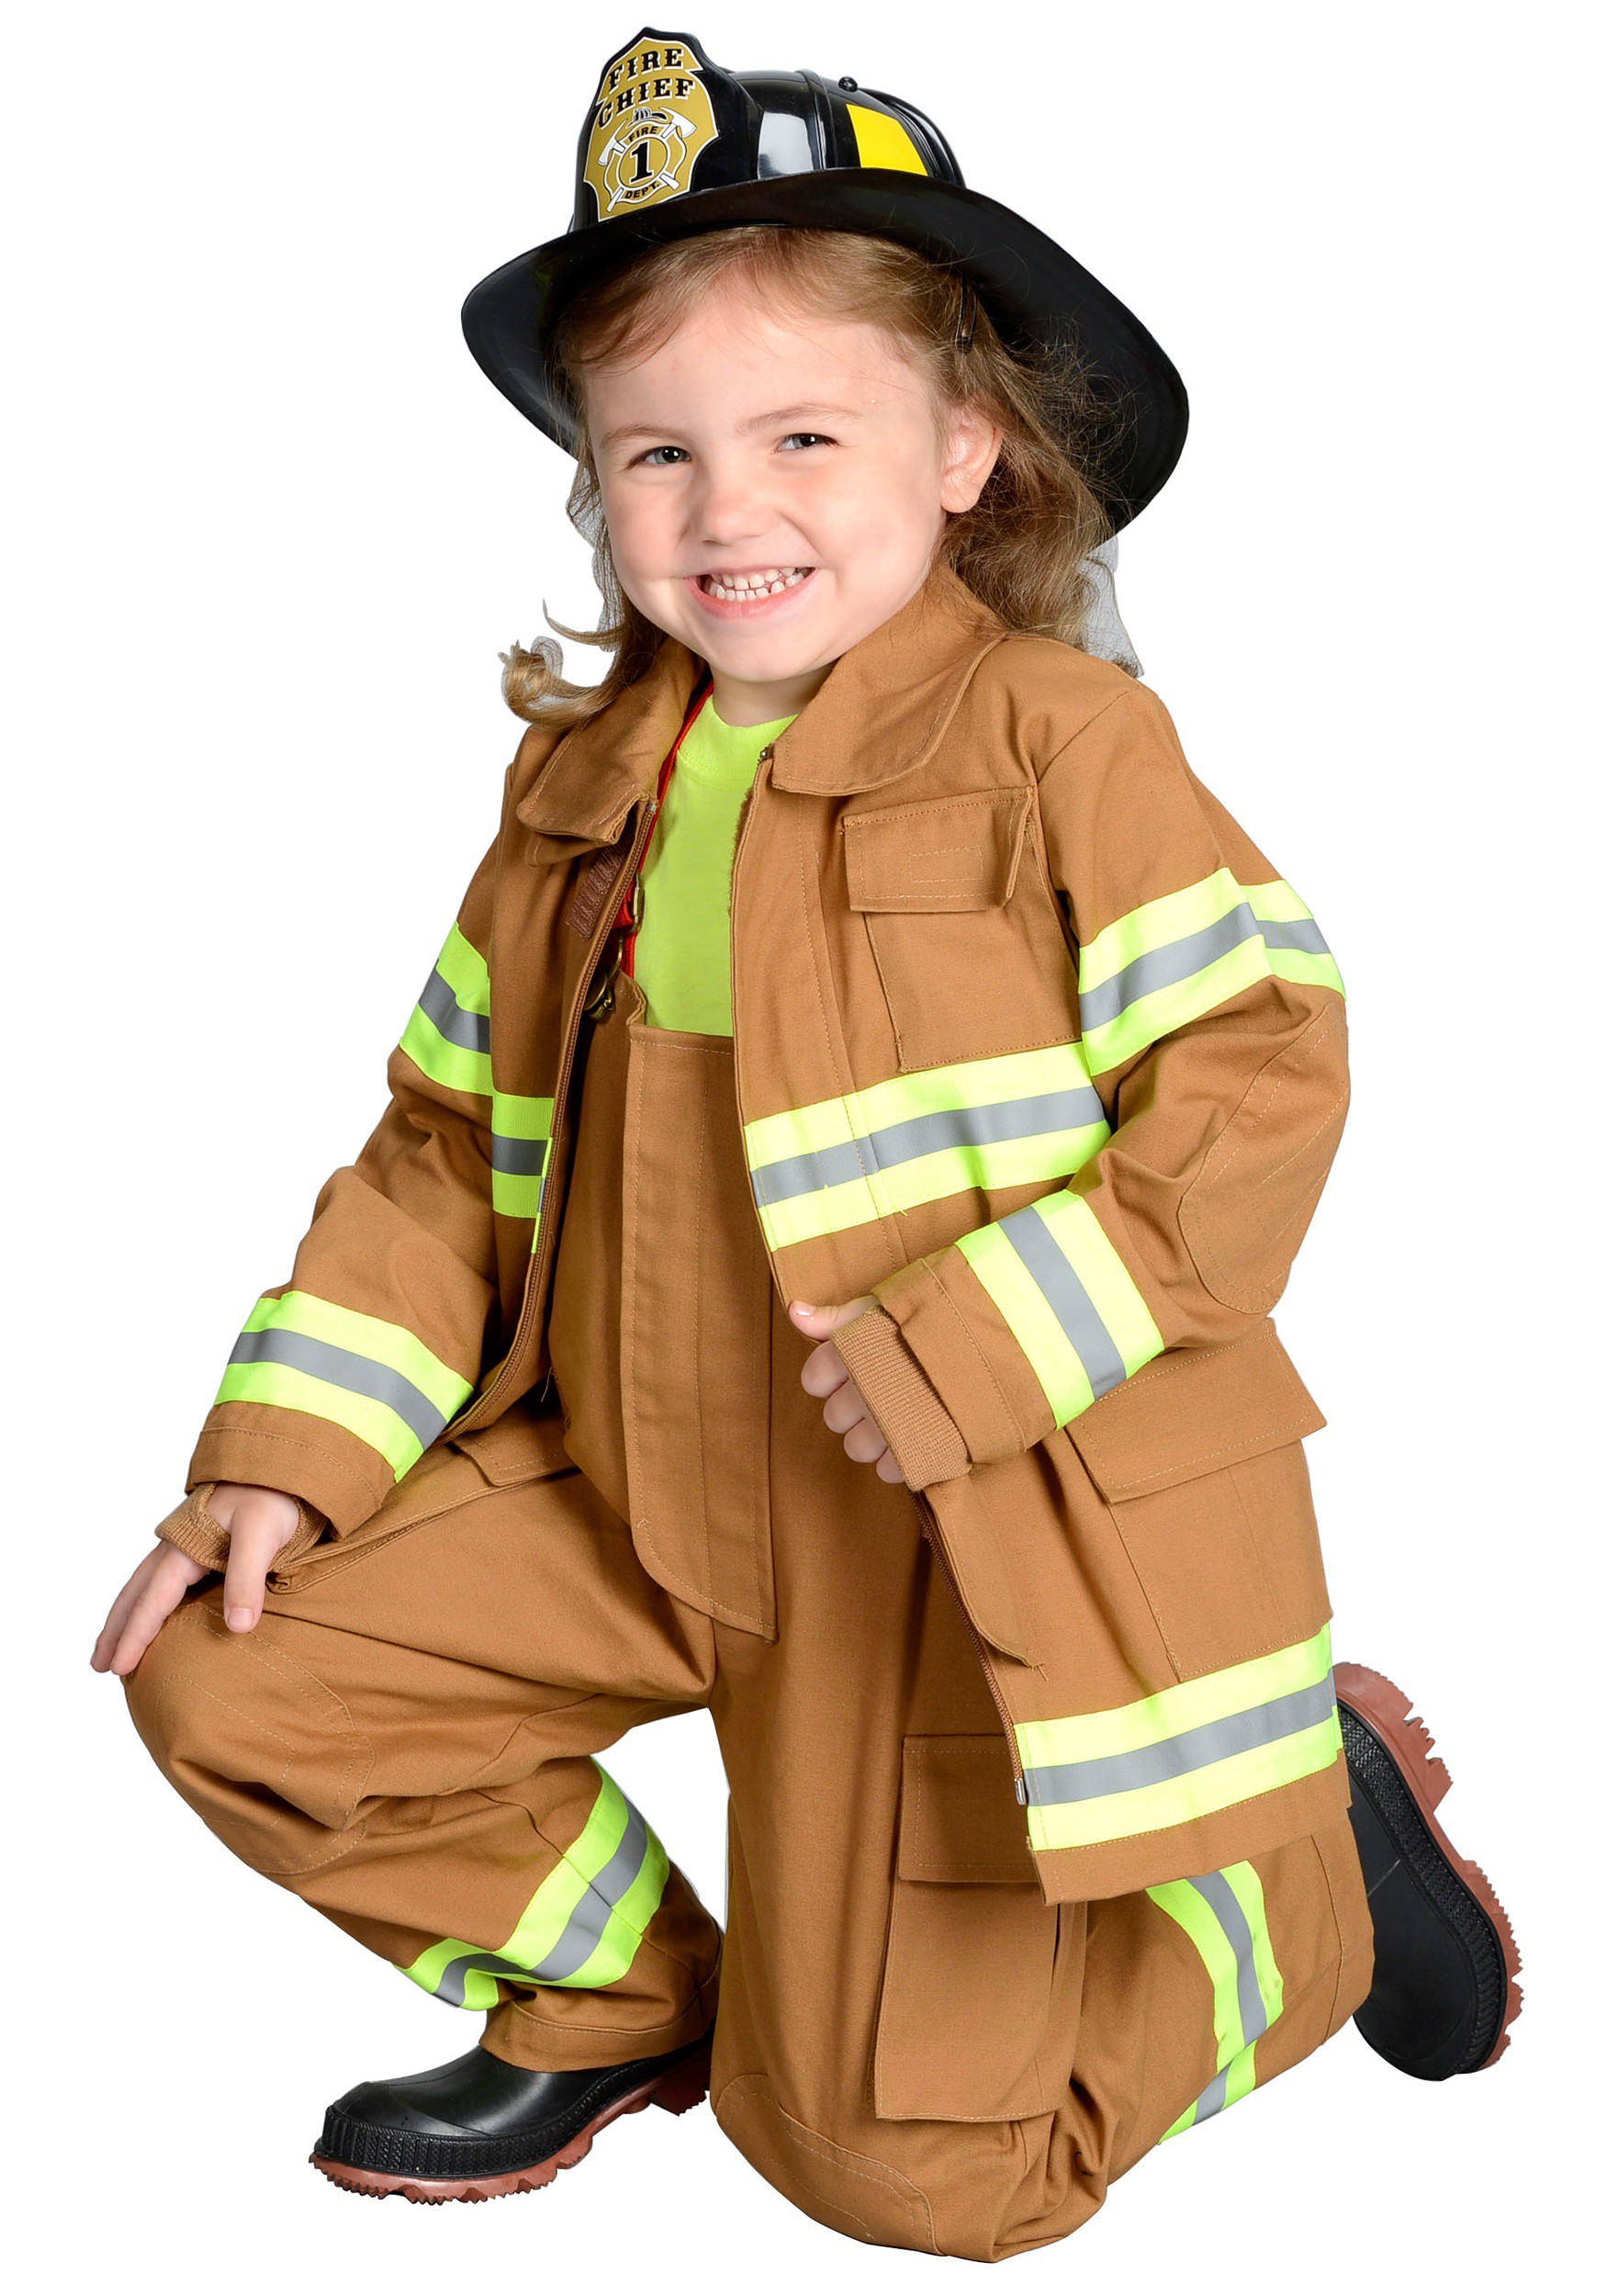 16+ Kids Firefighter Costume